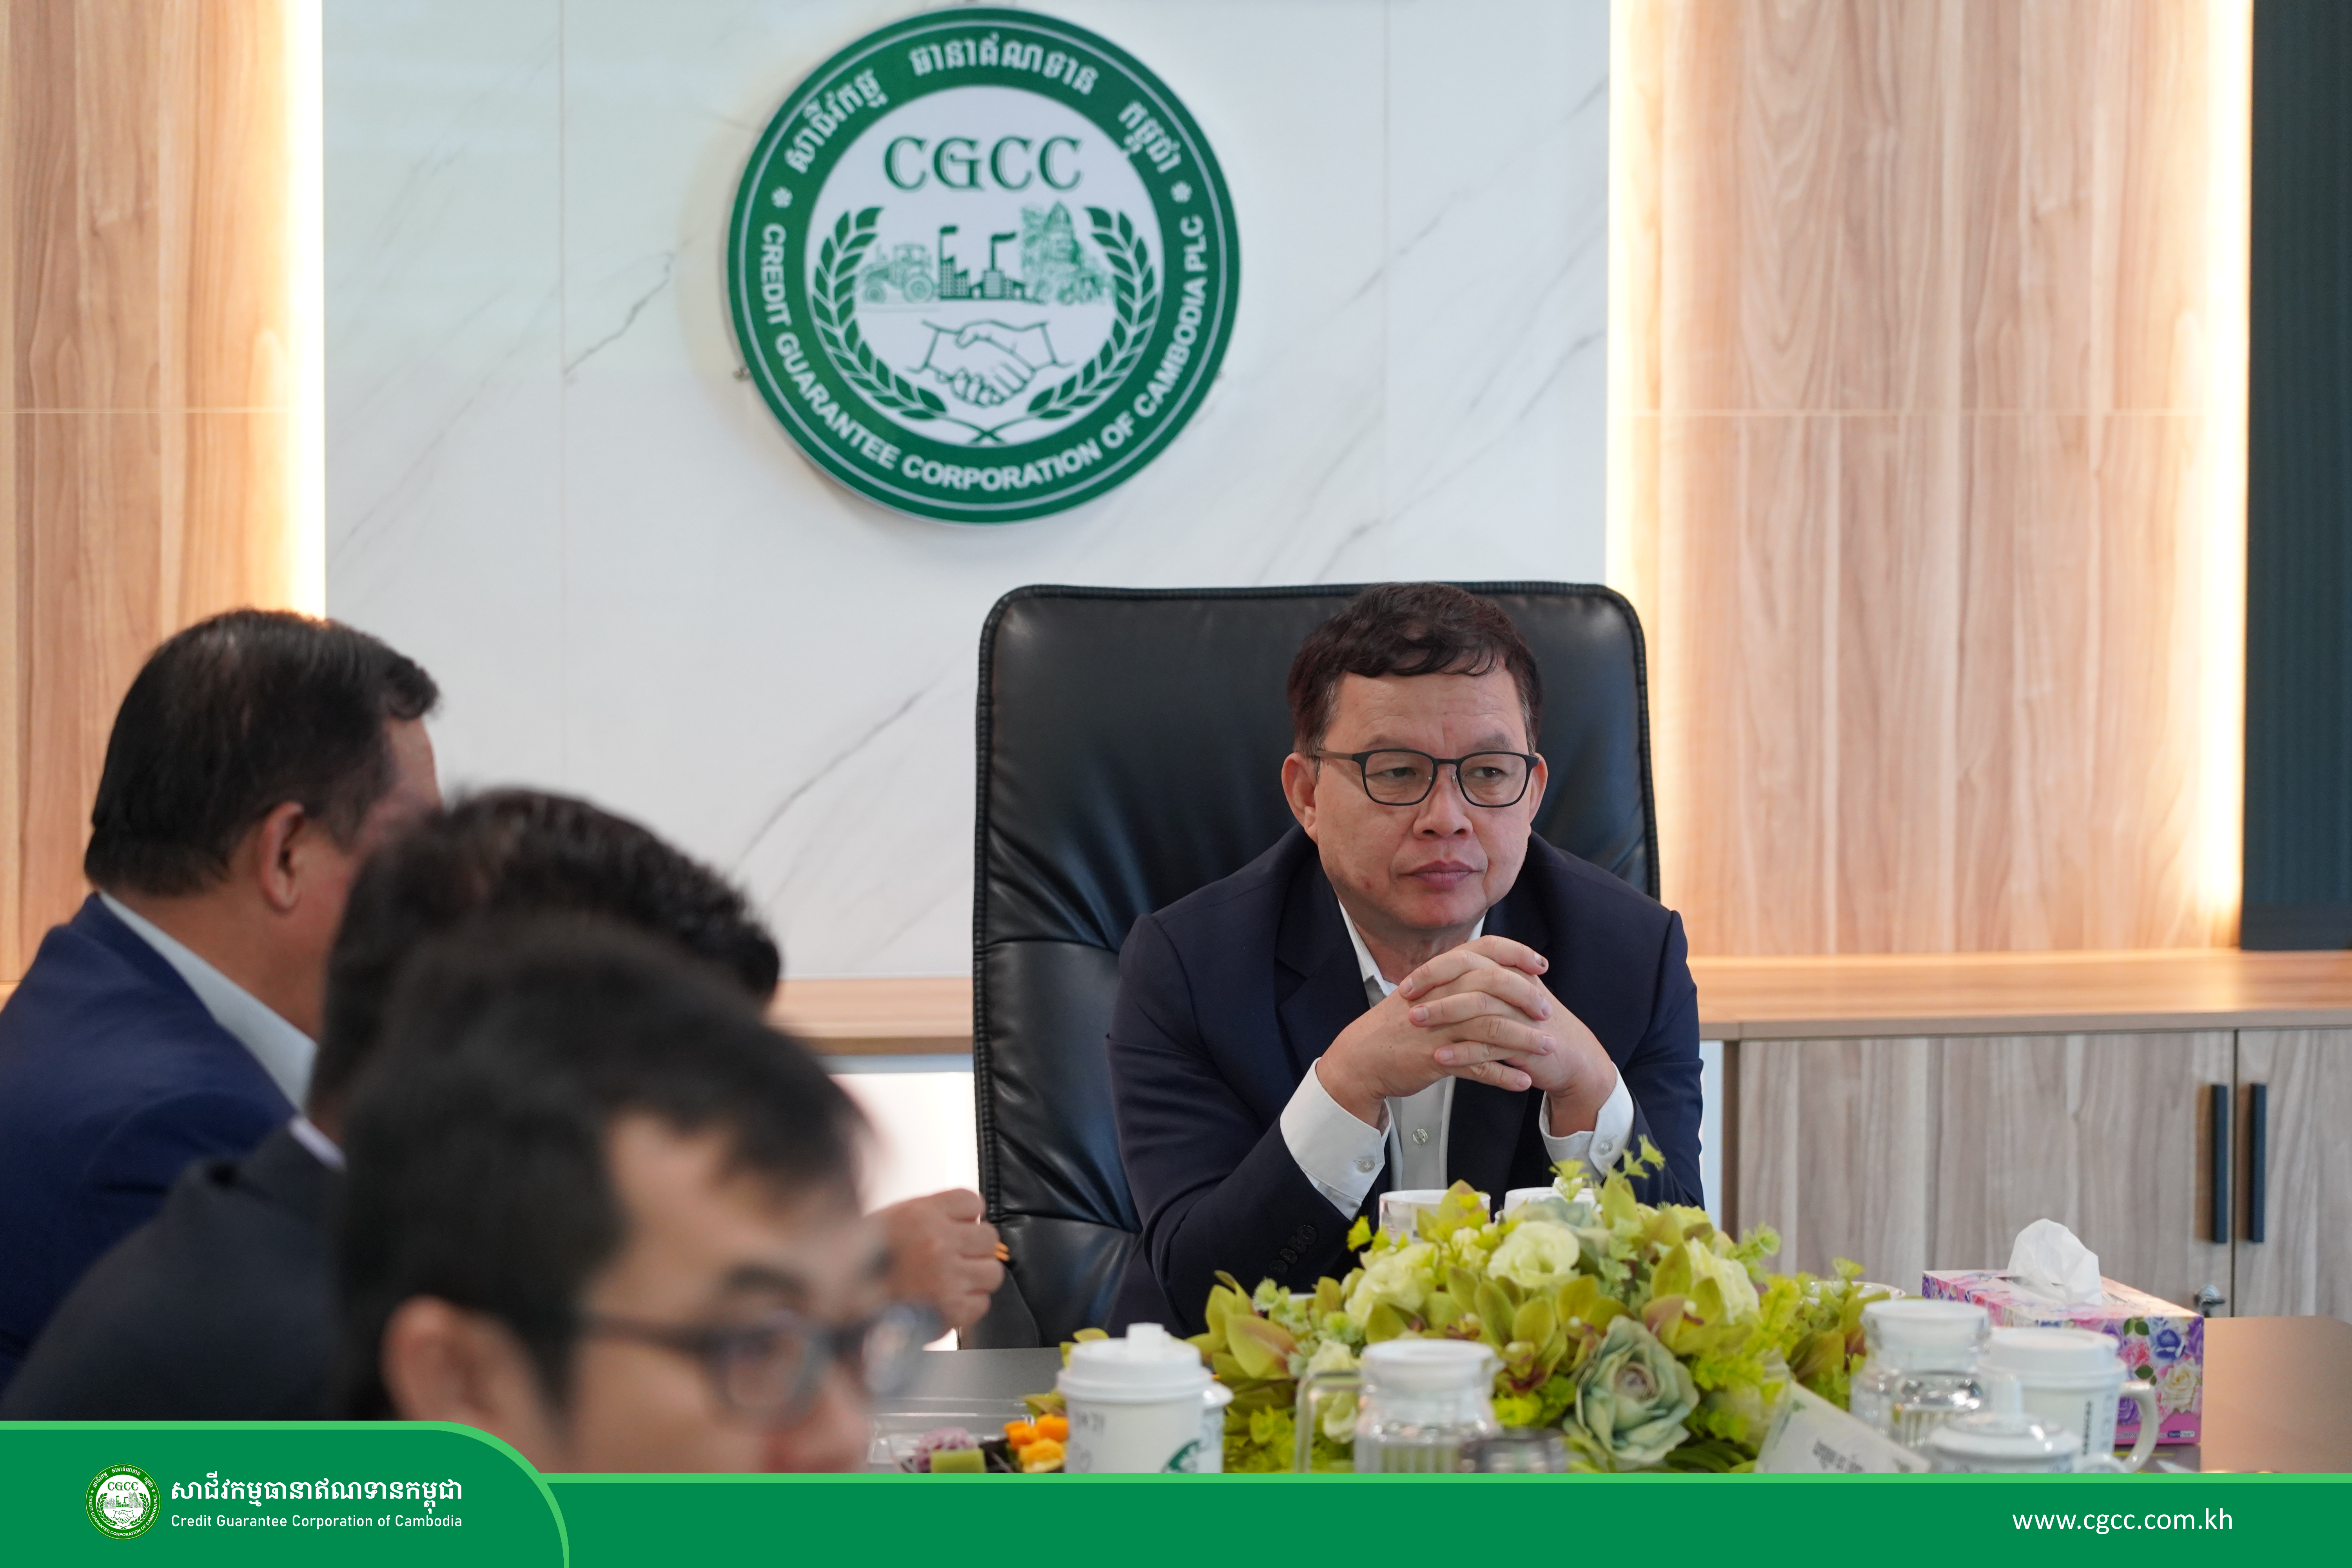 15th Board of Directors Meeting of Credit Guarantee Corporation of Cambodia (CGCC)